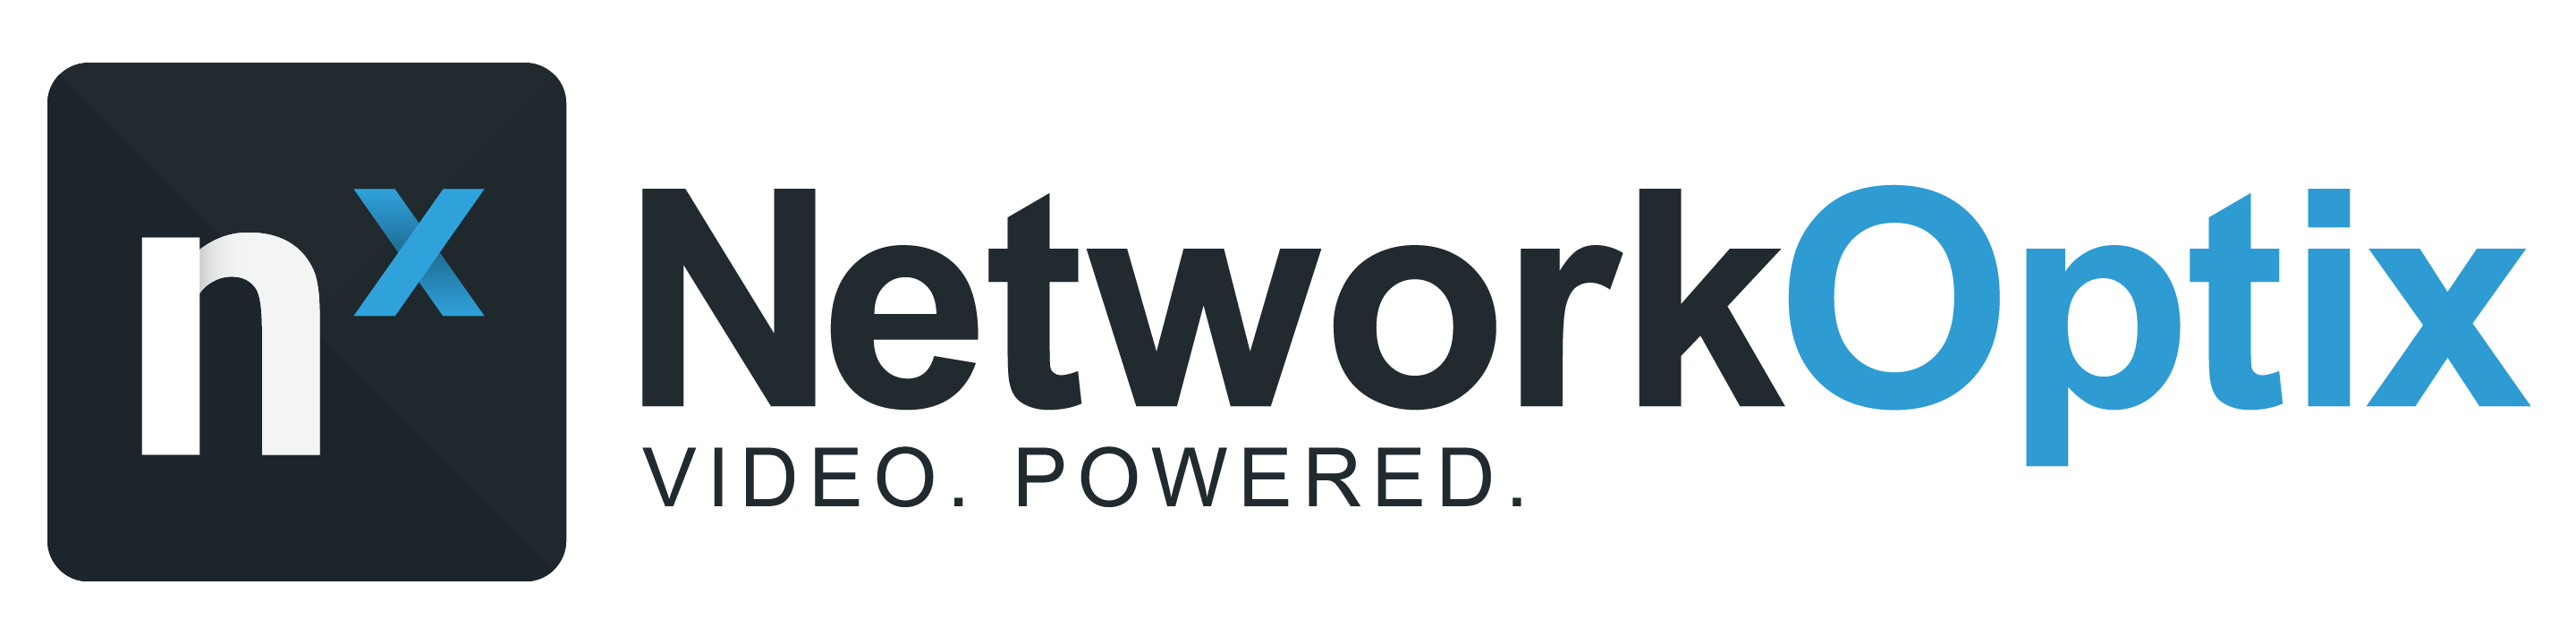 Network Optix_logo